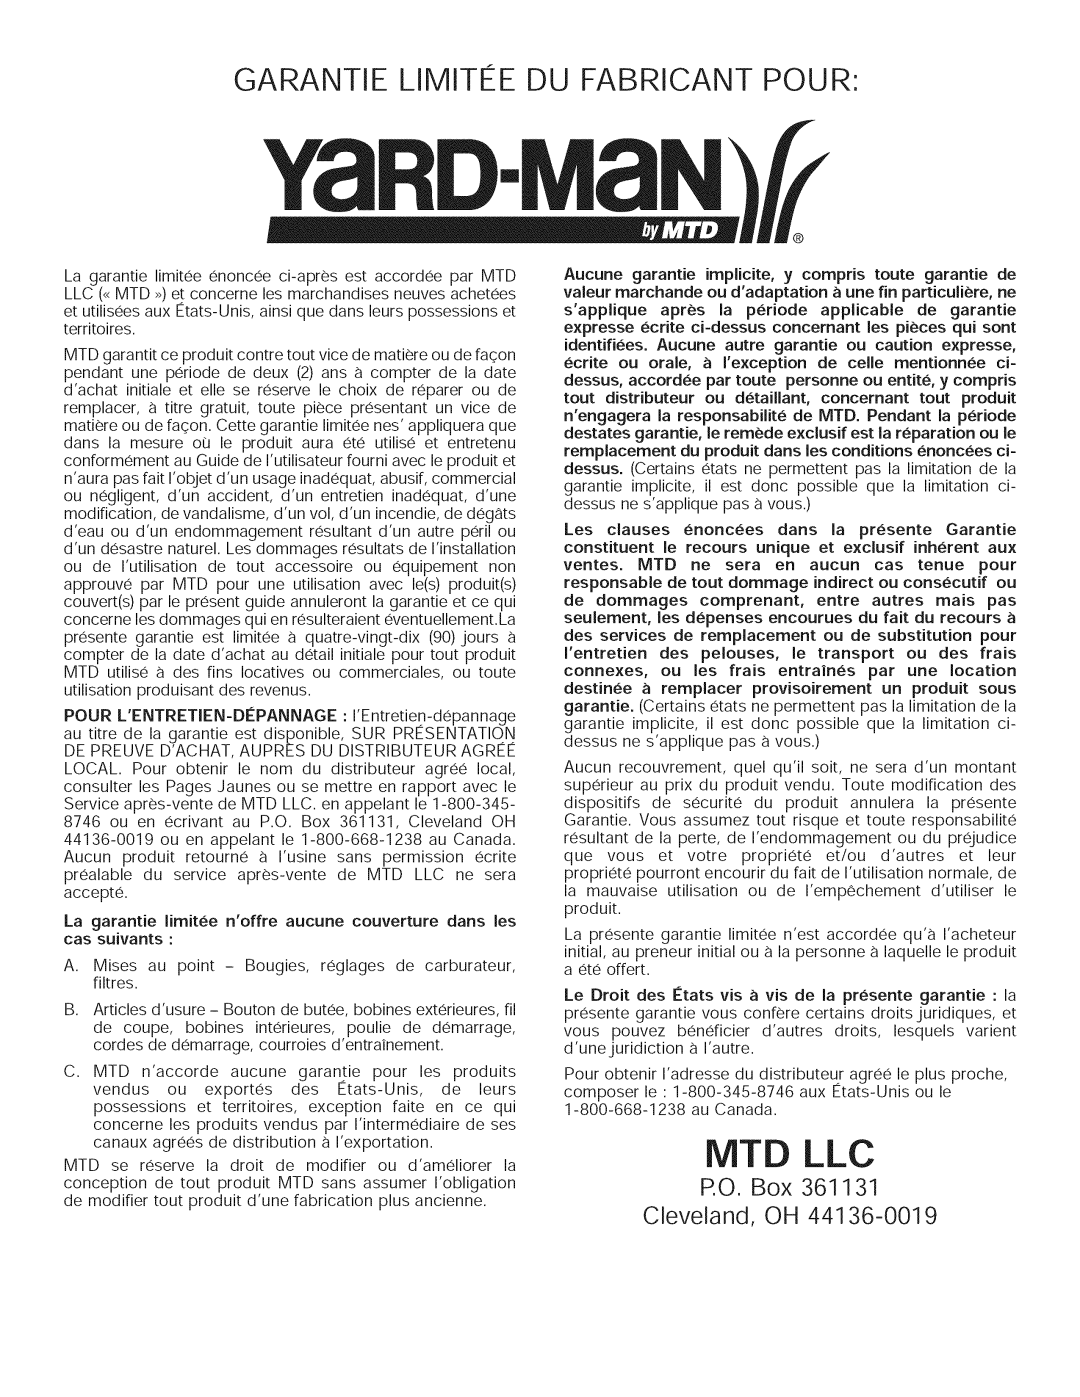 Yard-Man 769.01408 manual Garantie Limitee Du Fabricant Pour, Mtd Llc, Cleveland, OH, P.O. Box 